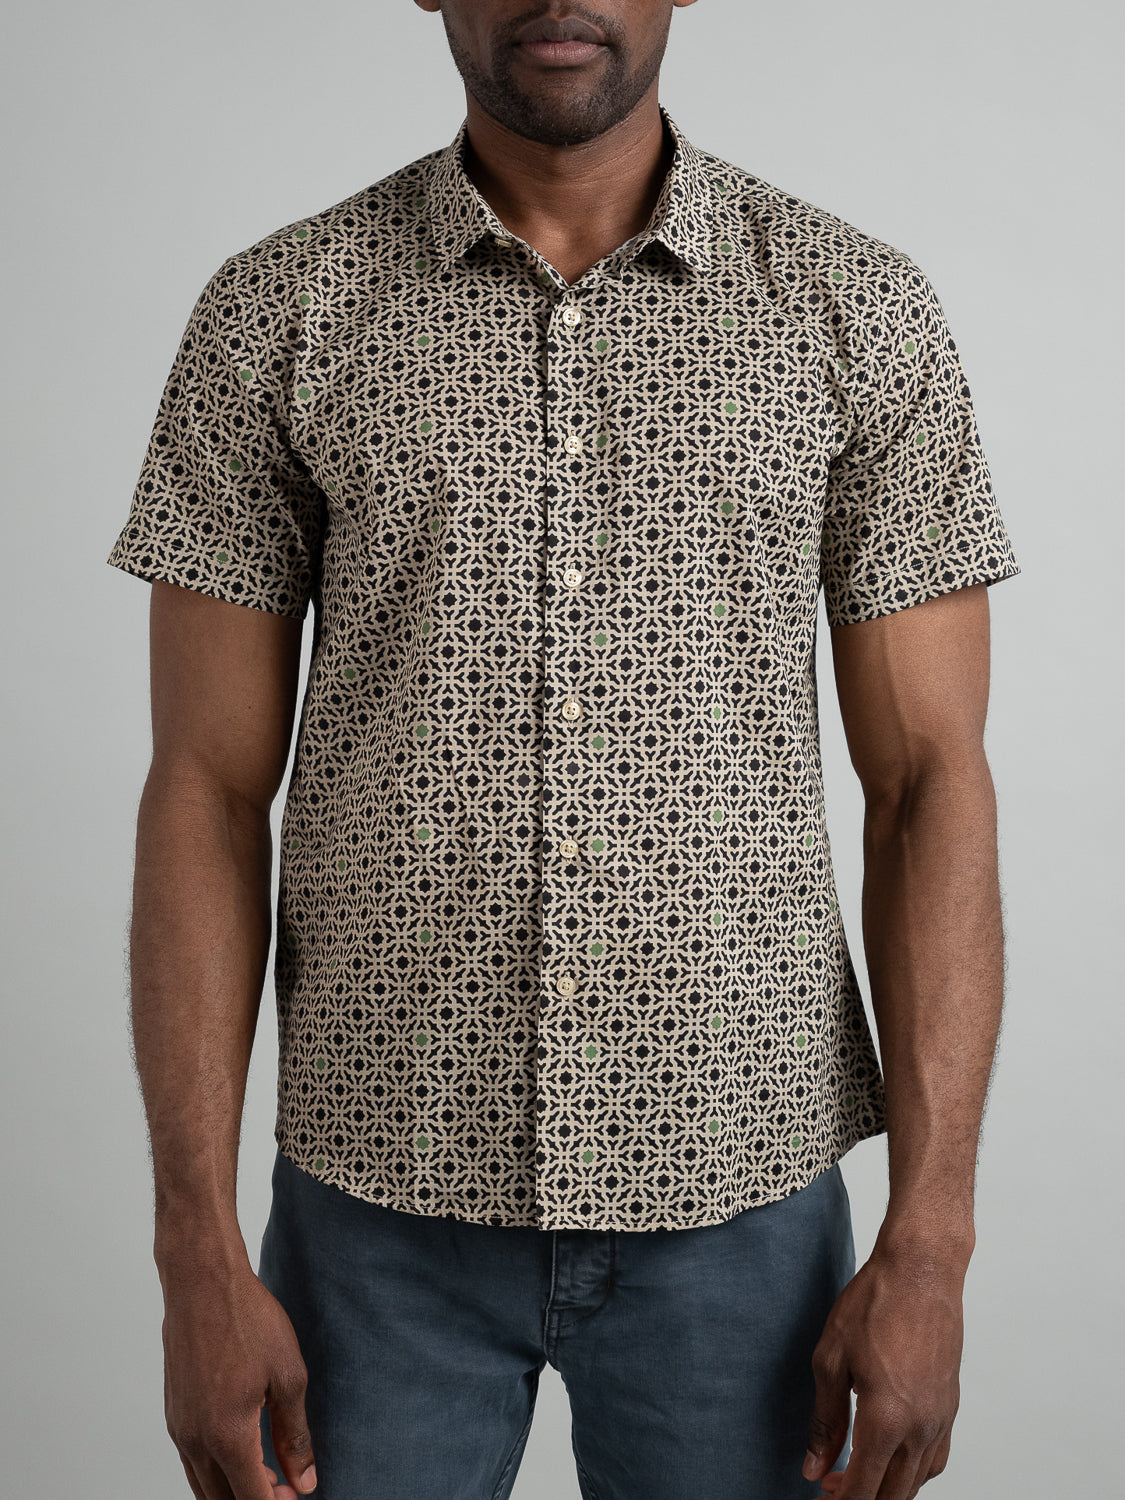 Tetra Short Sleeve 100% Cotton Printed Shirt